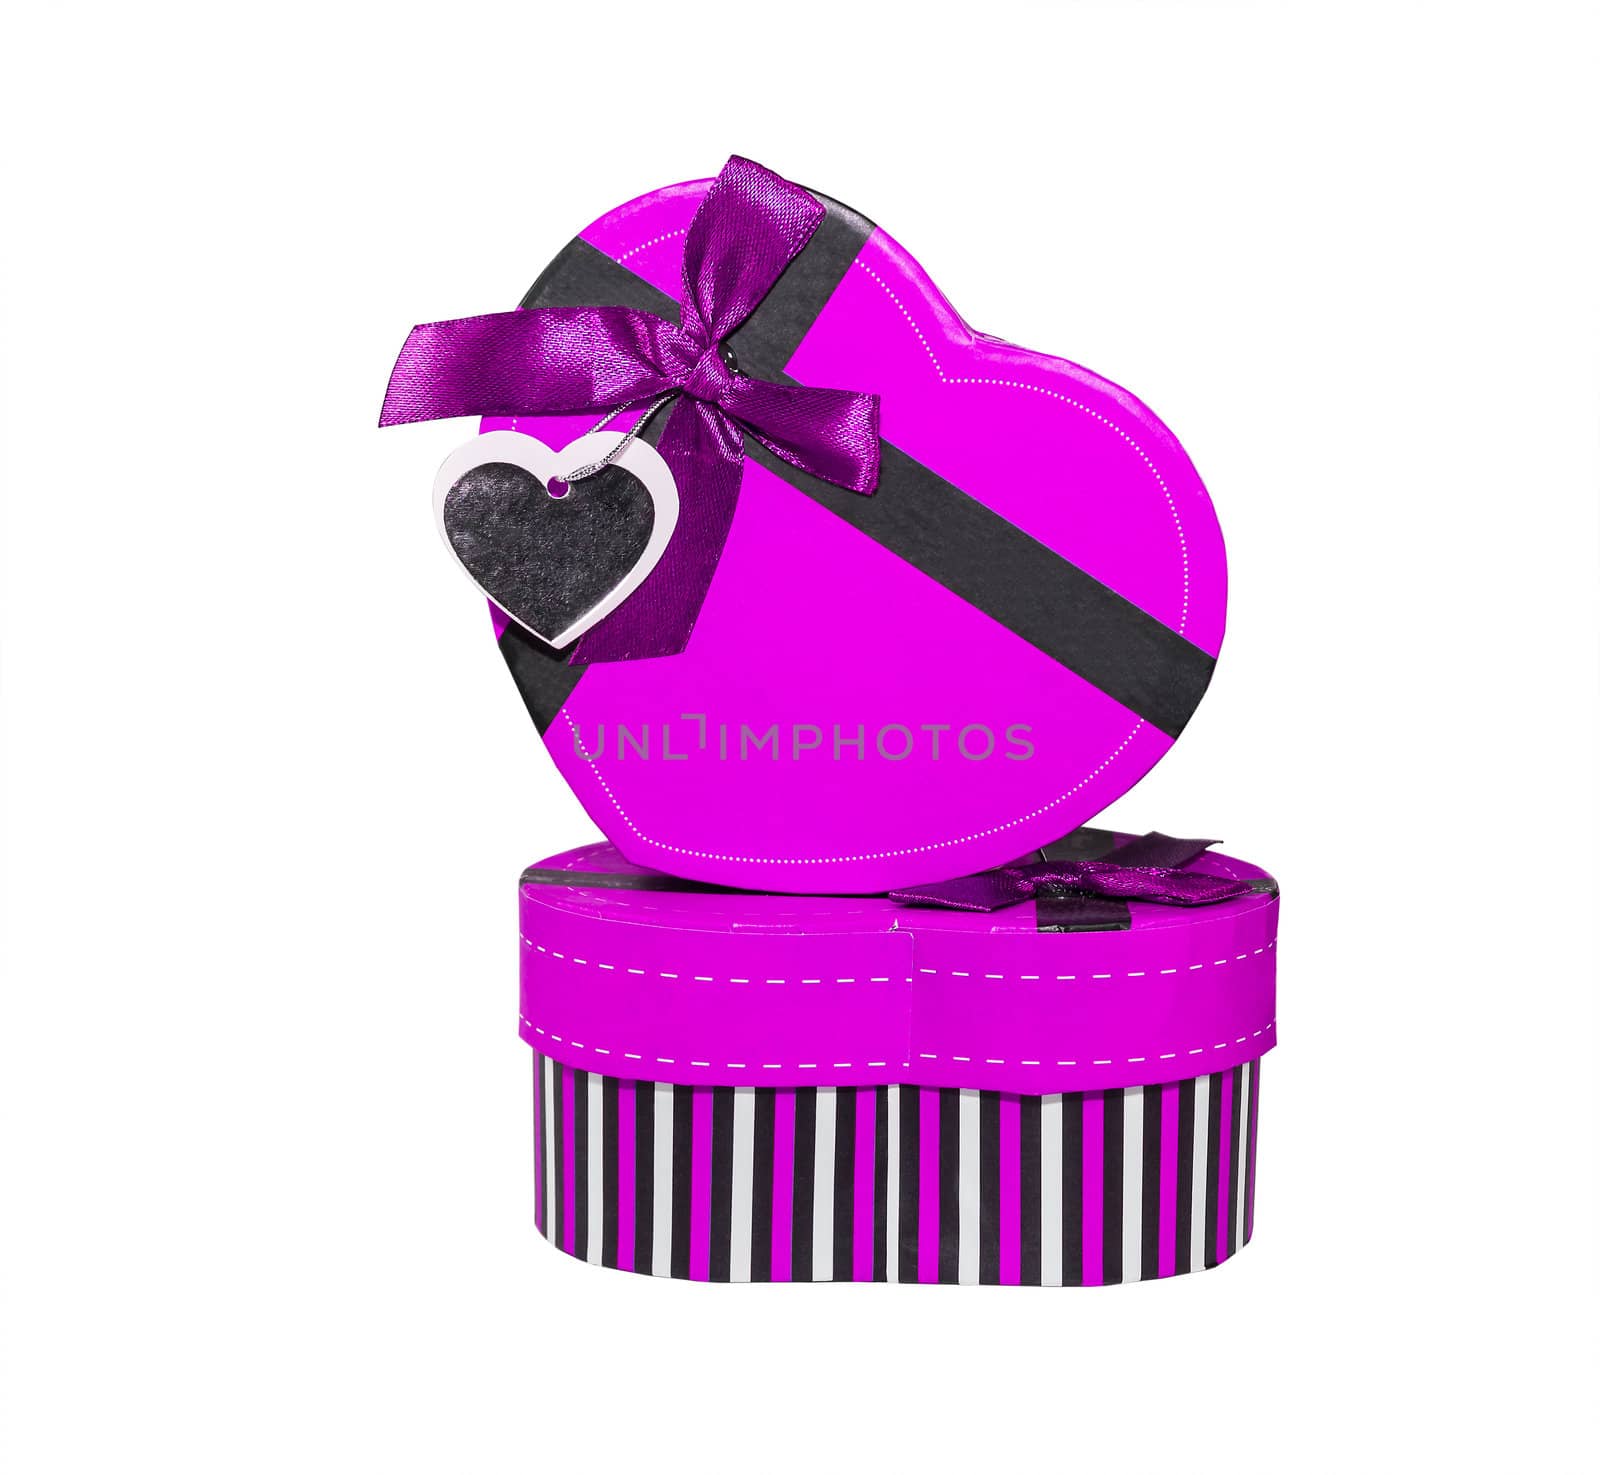 Violet  Heart shaped box by stoonn